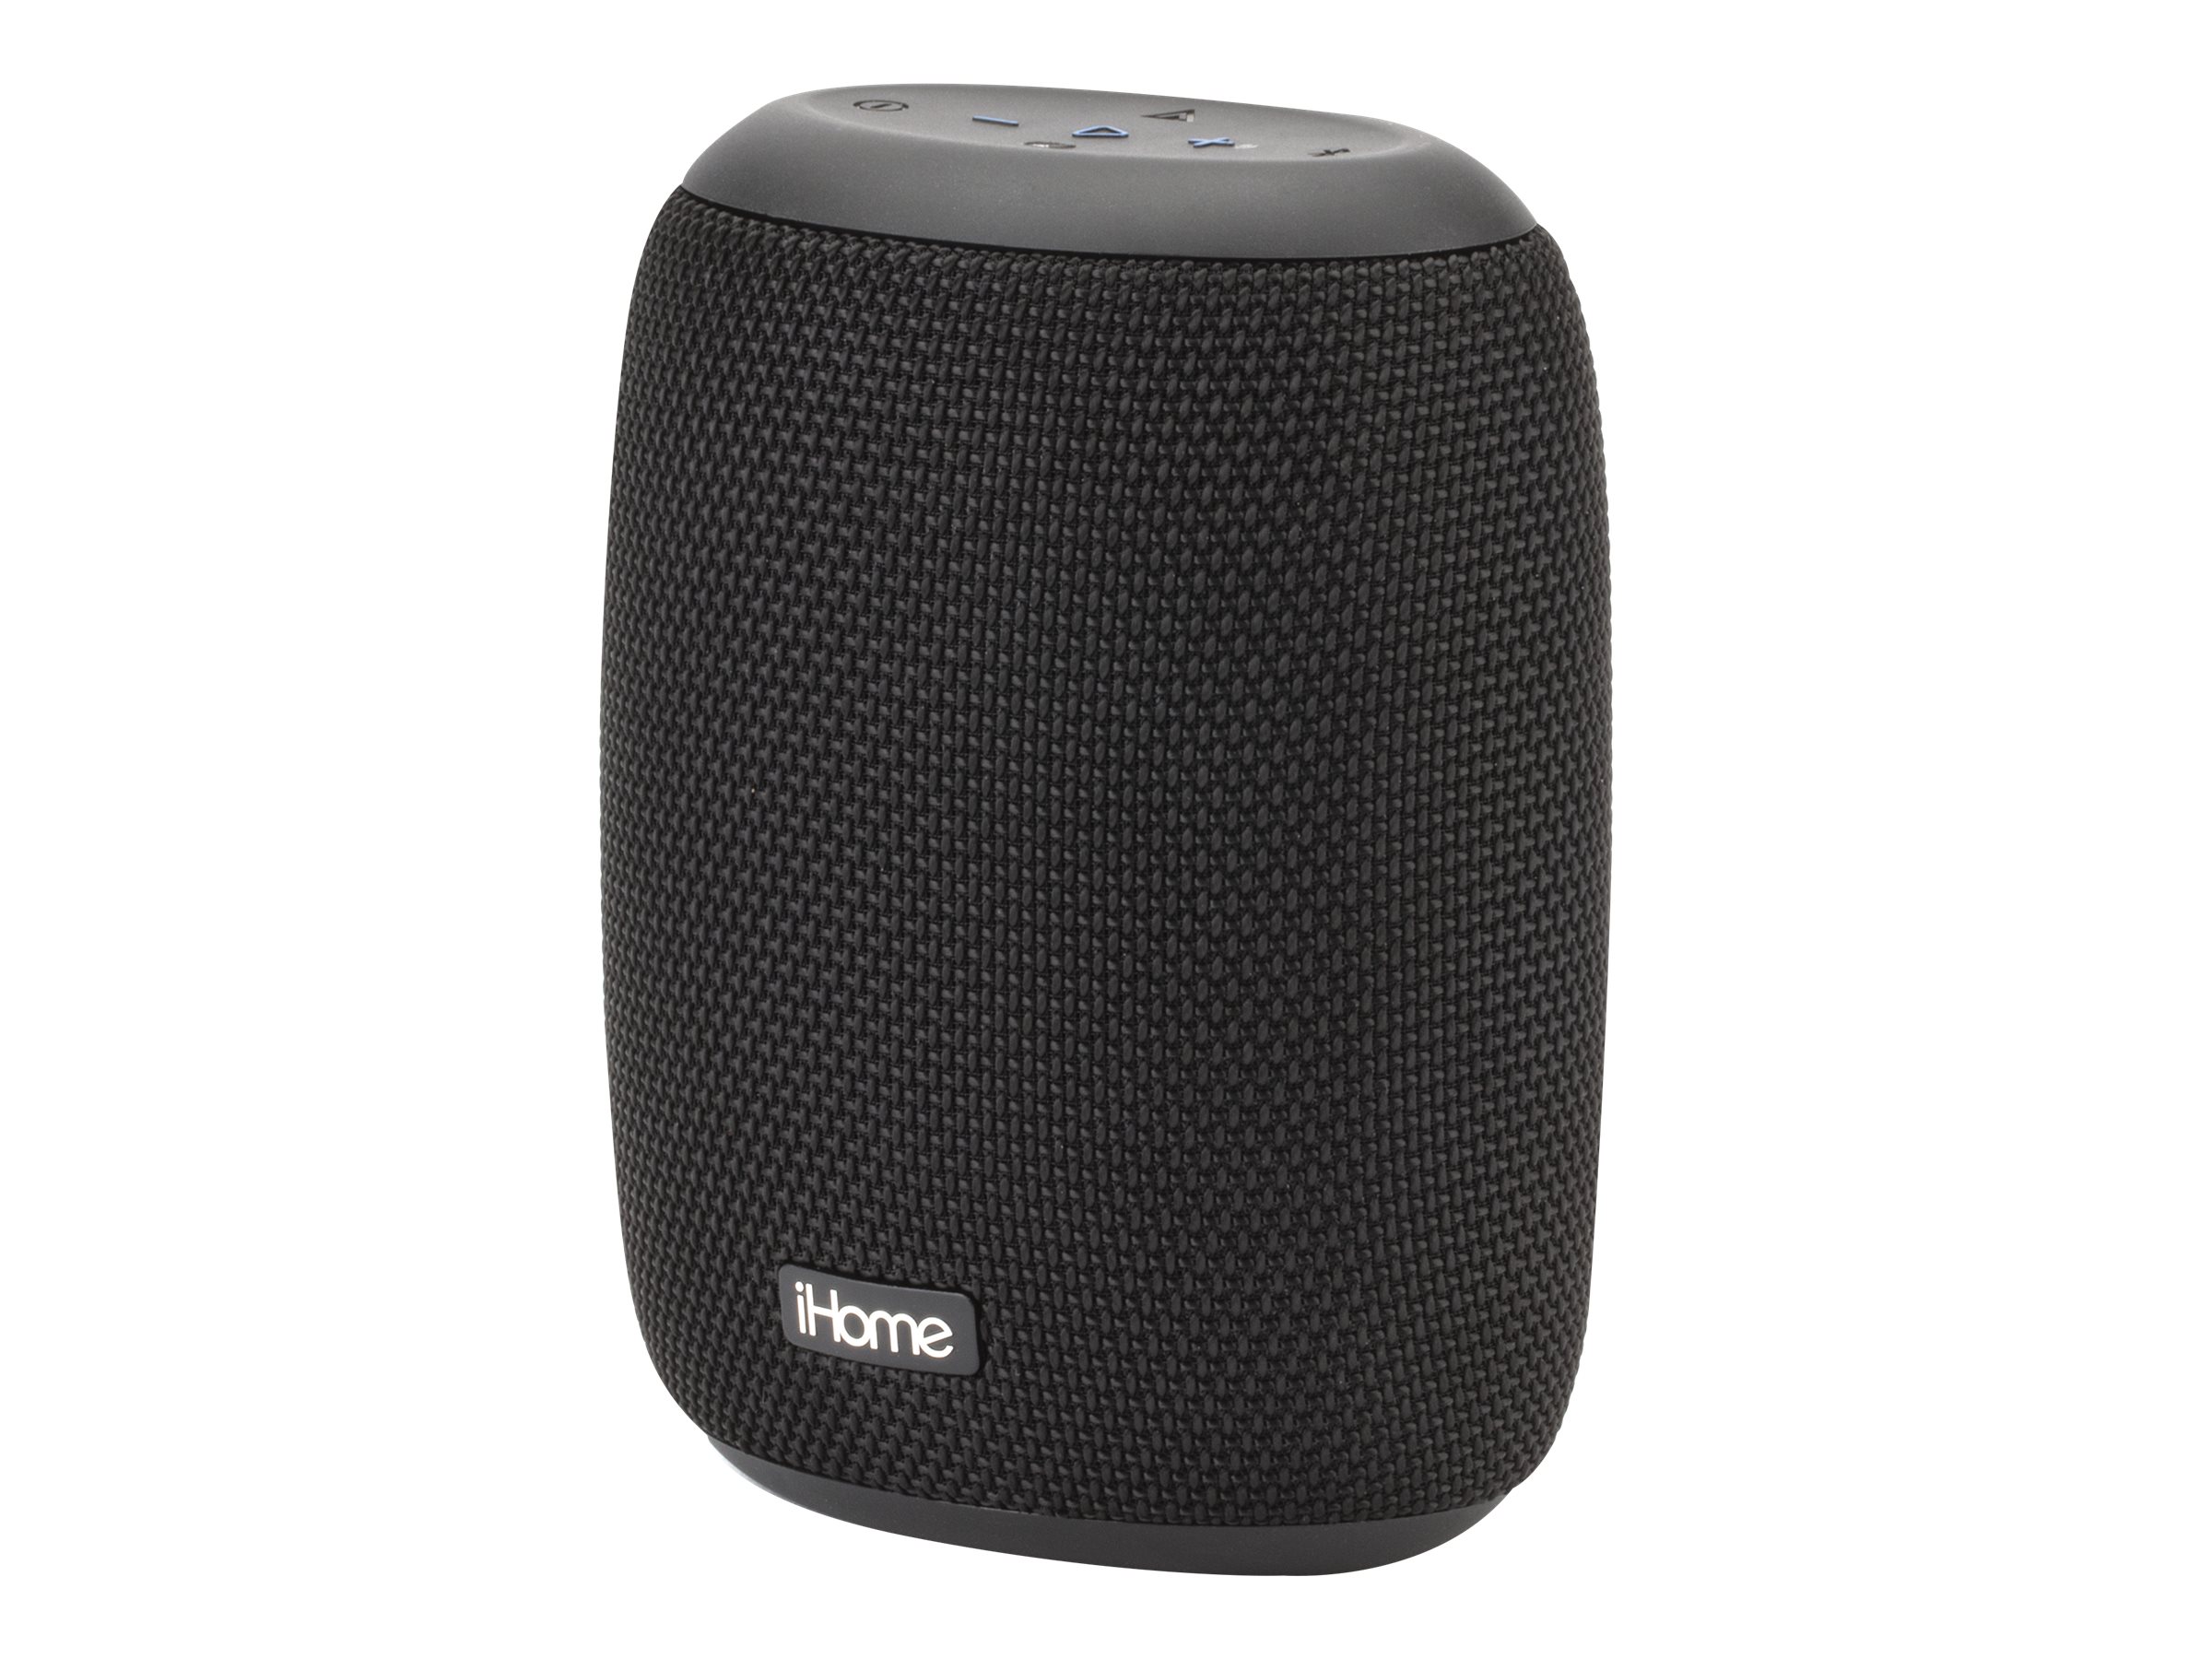 iHome PLAYPRO Portable Bluetooth Speaker, Black, iBT700 - image 1 of 8